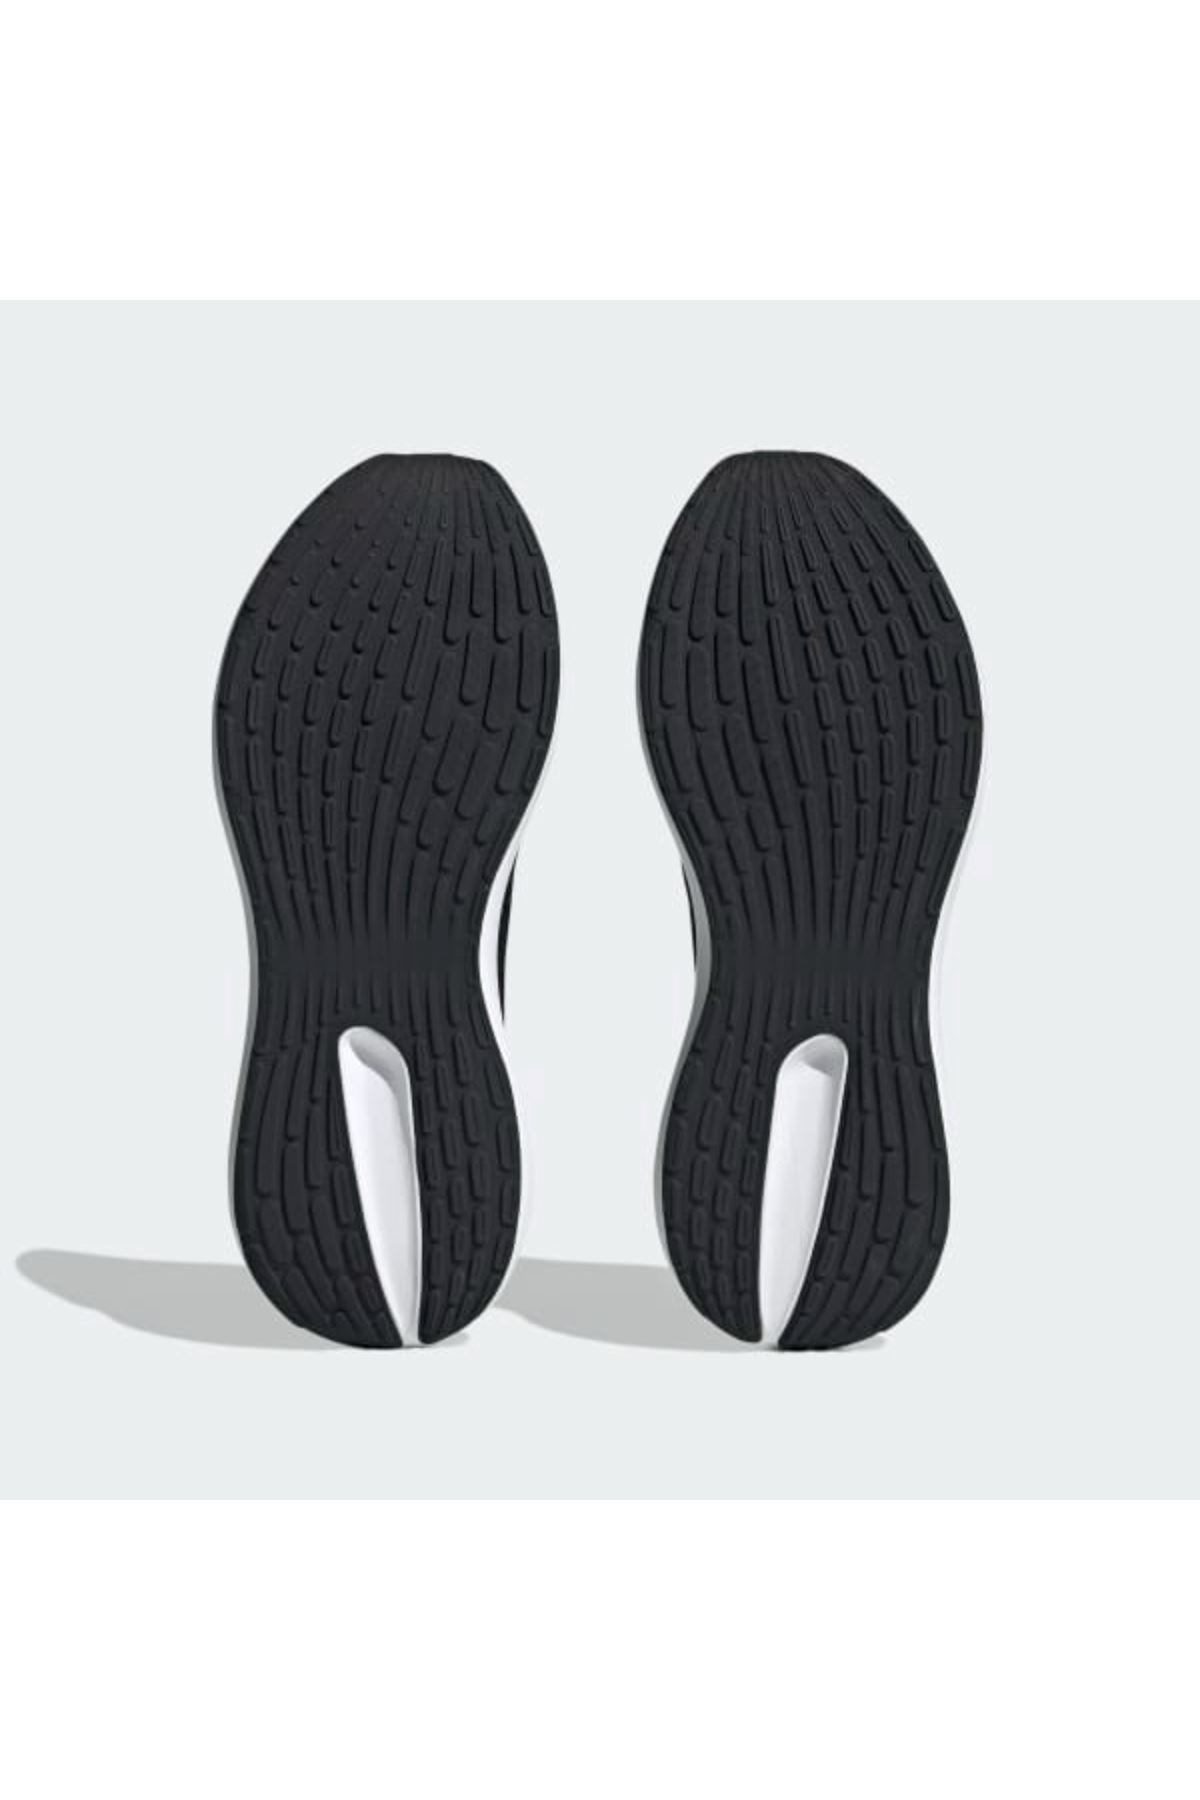 Adidas Response Runner U Erkek Siyah Spor Ayakkabı - ID7336